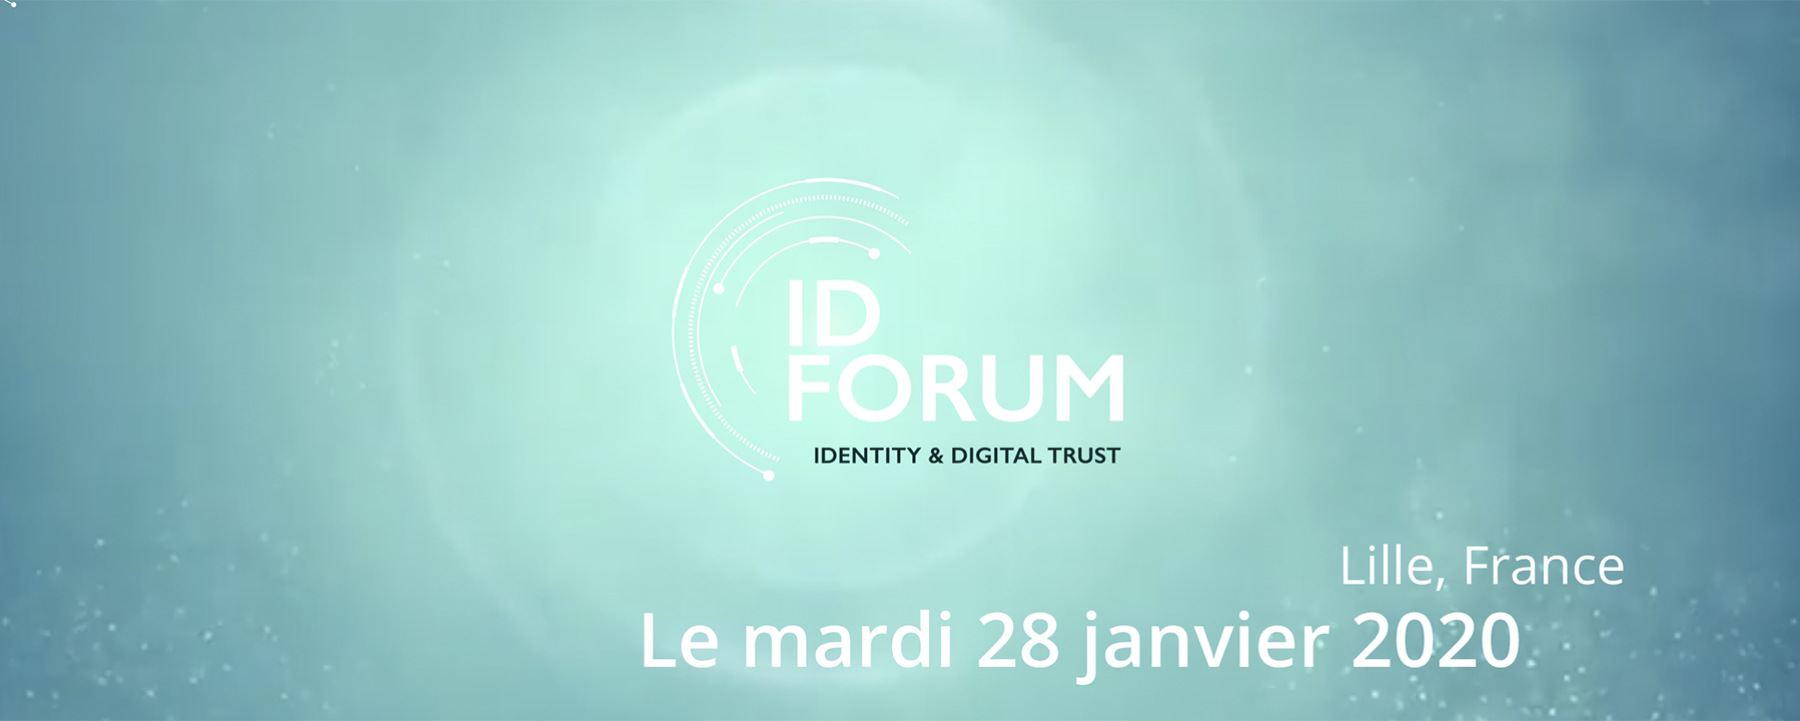 ID Forum 2020